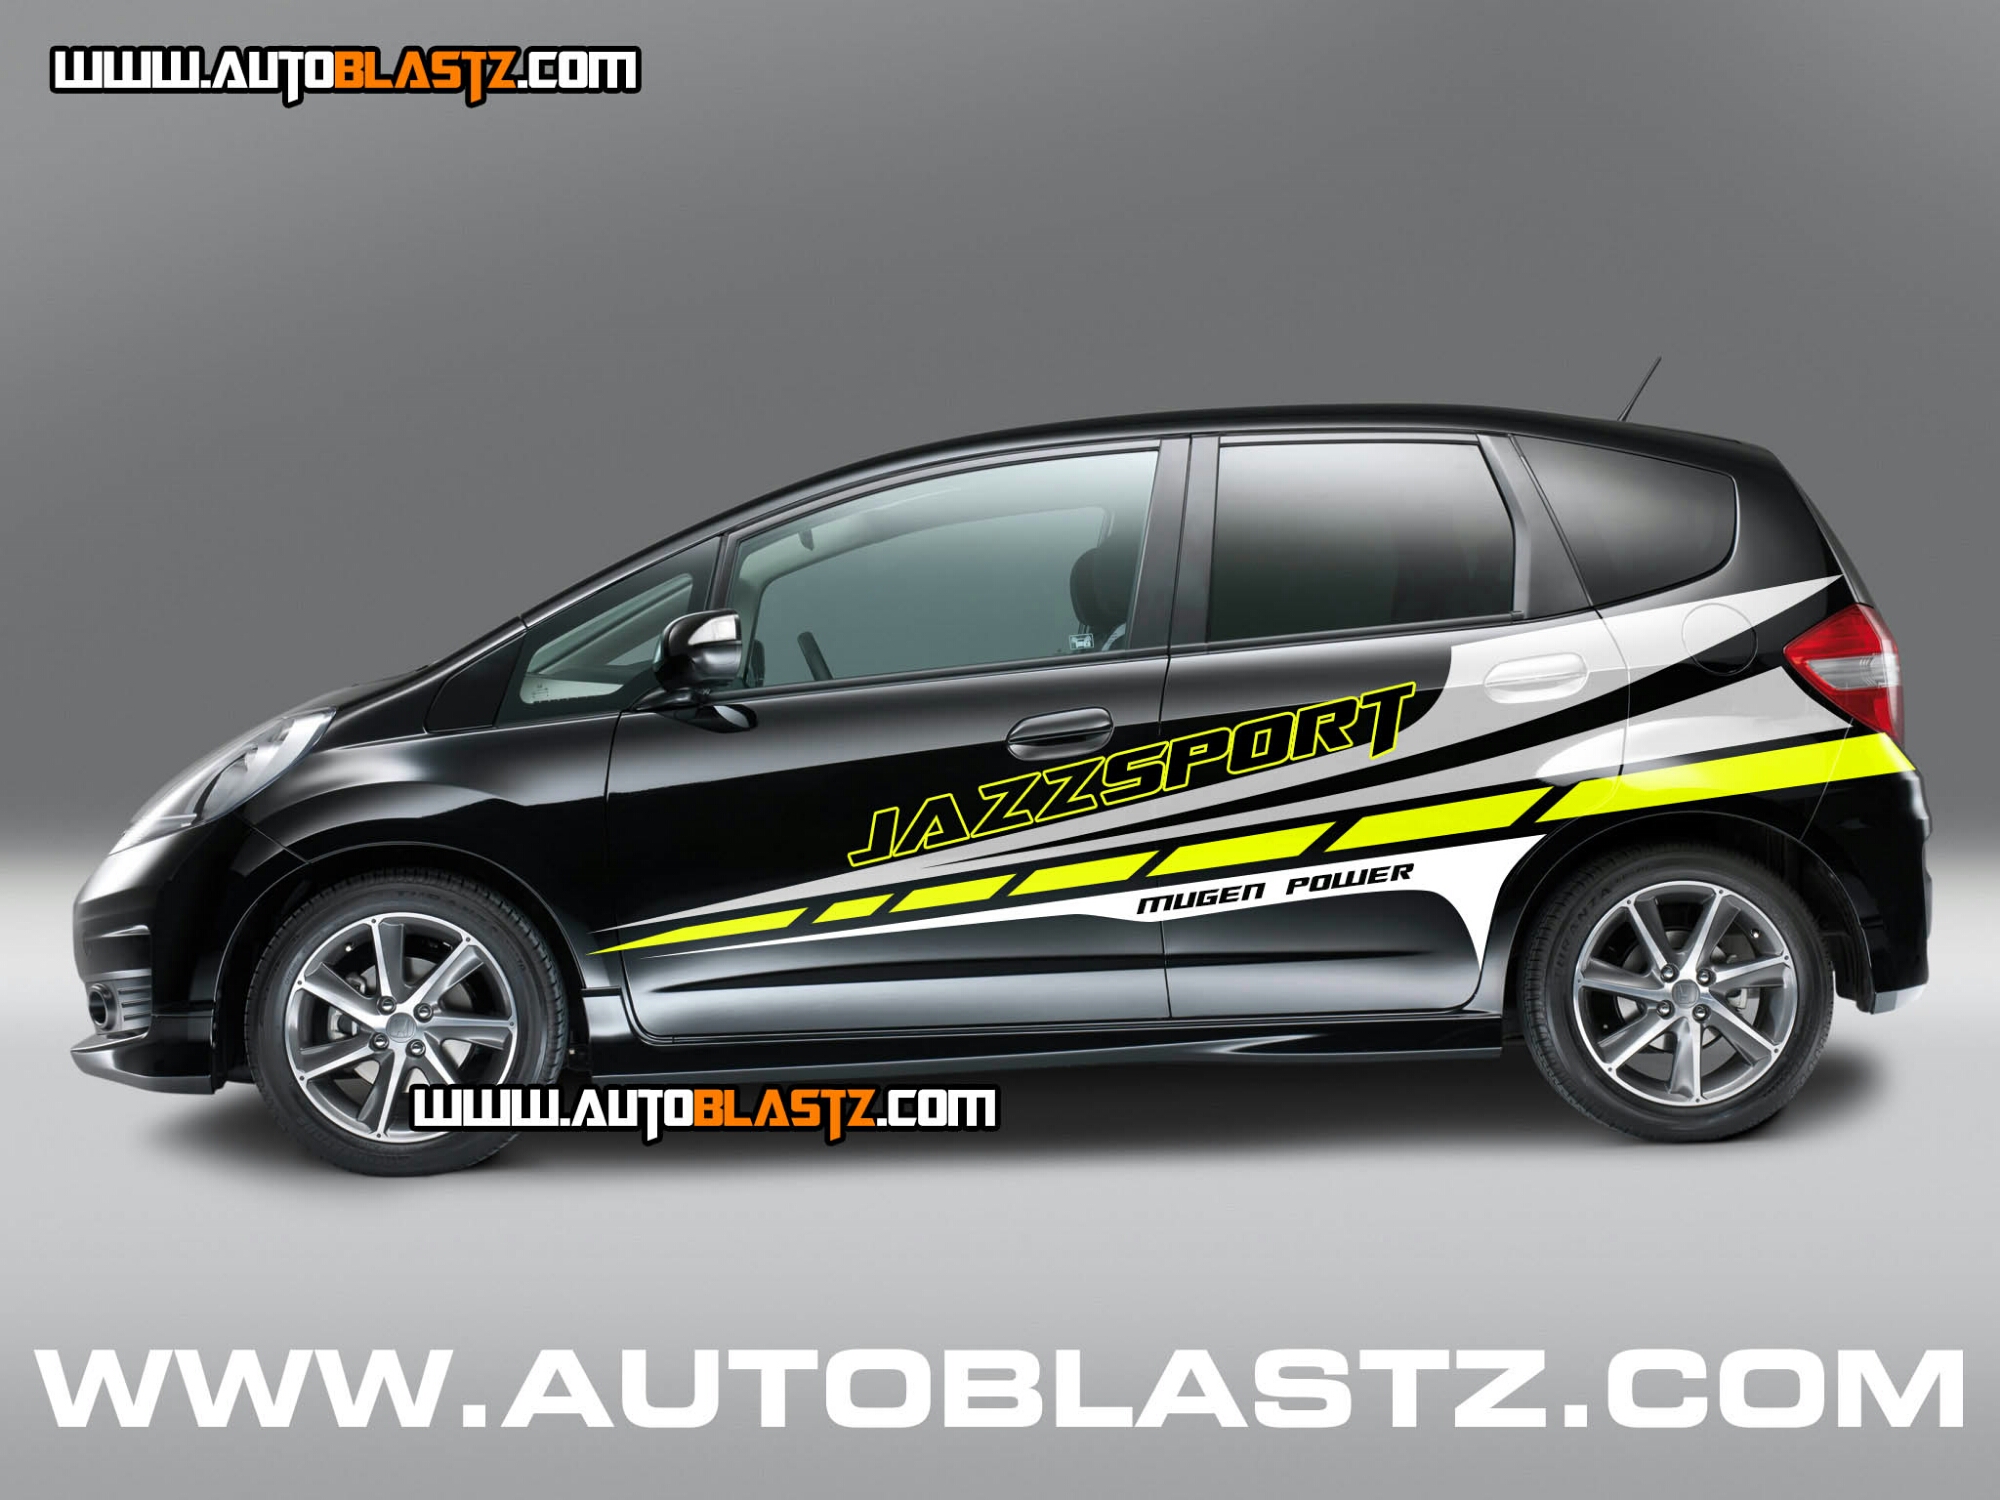 Motoblast HOT CAR SERIES Modif Striping Honda Jazz Black